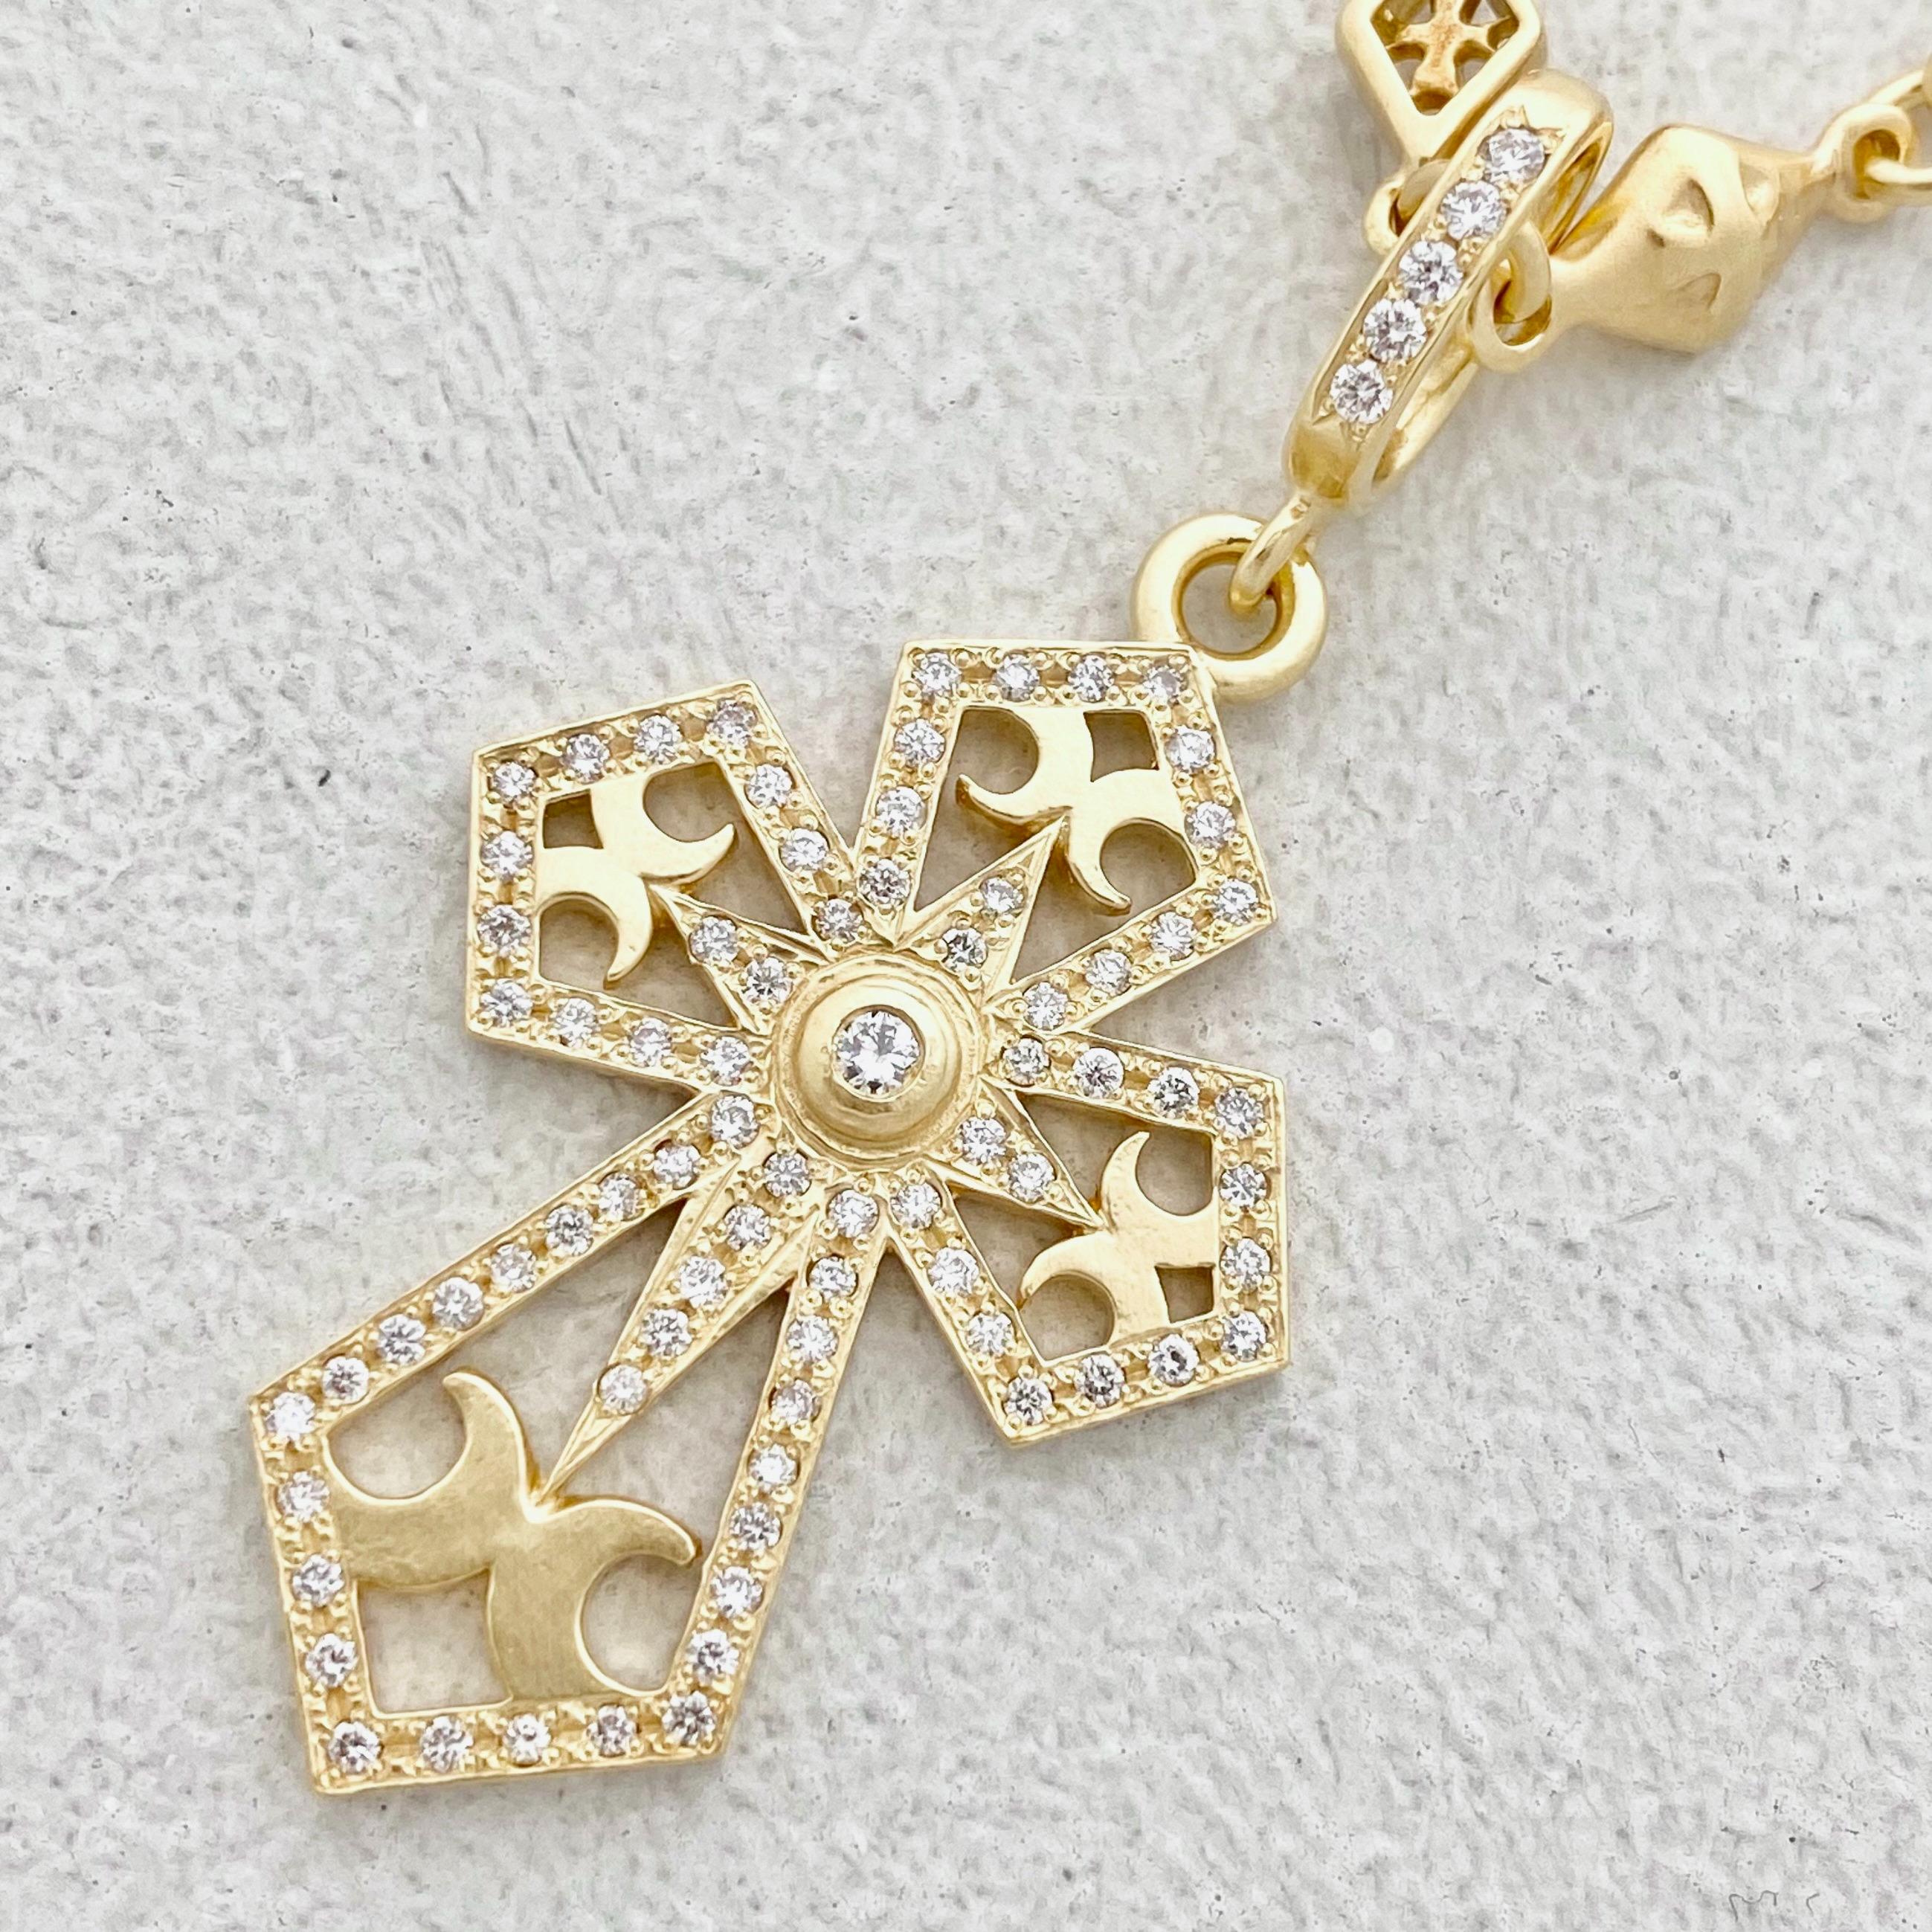 SMALL CATHEDRAL CROSS PENDANT 18k Yellow Gold / DIAMONDS Pendant